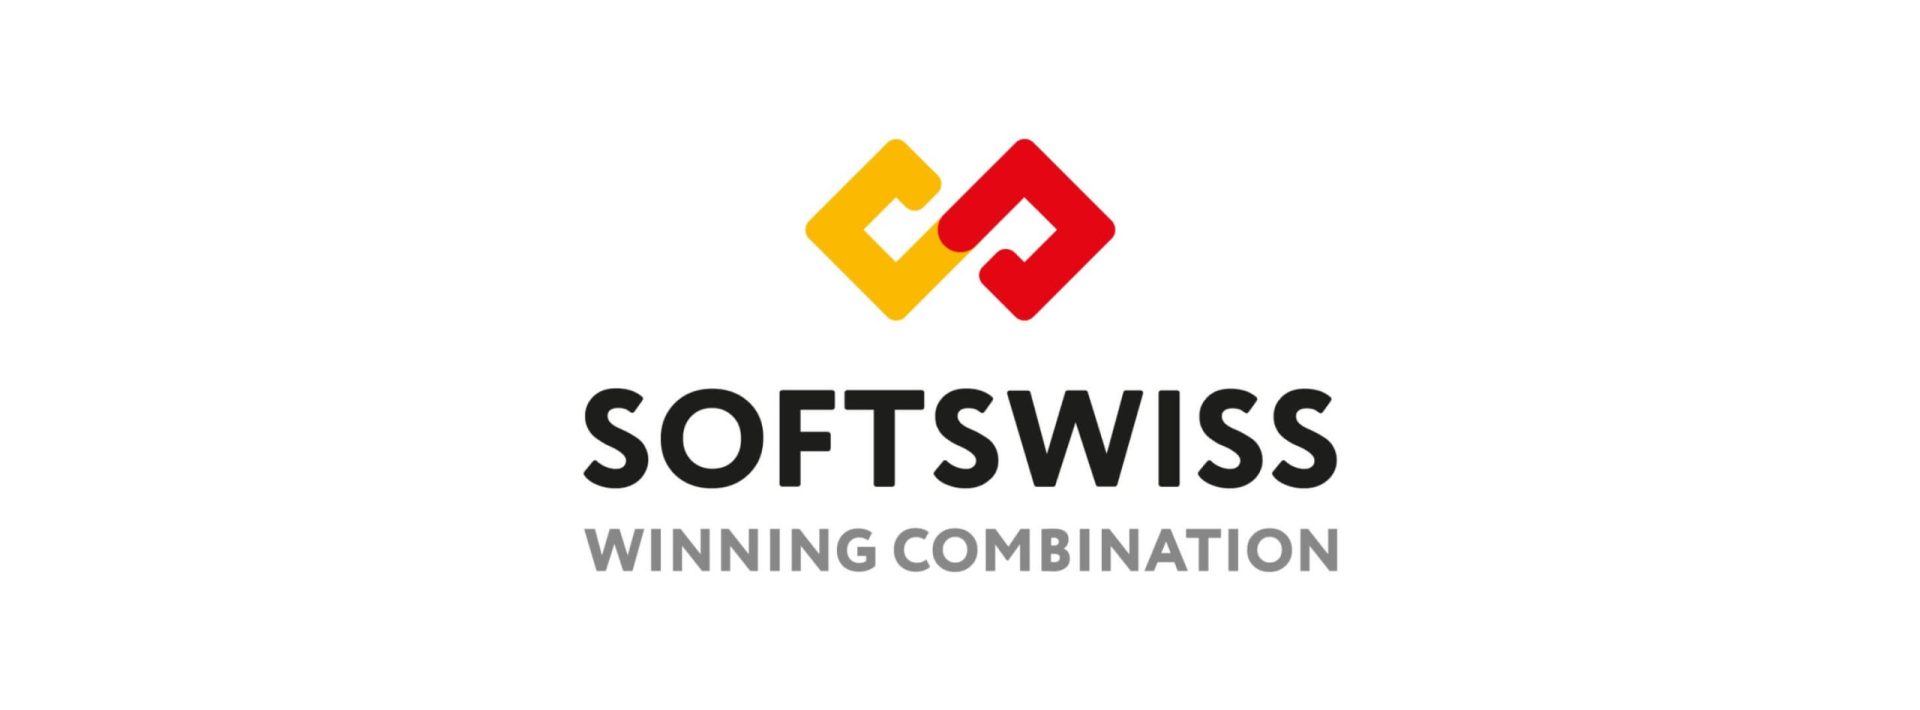 SOFTSWISS reveals crypto casino insights